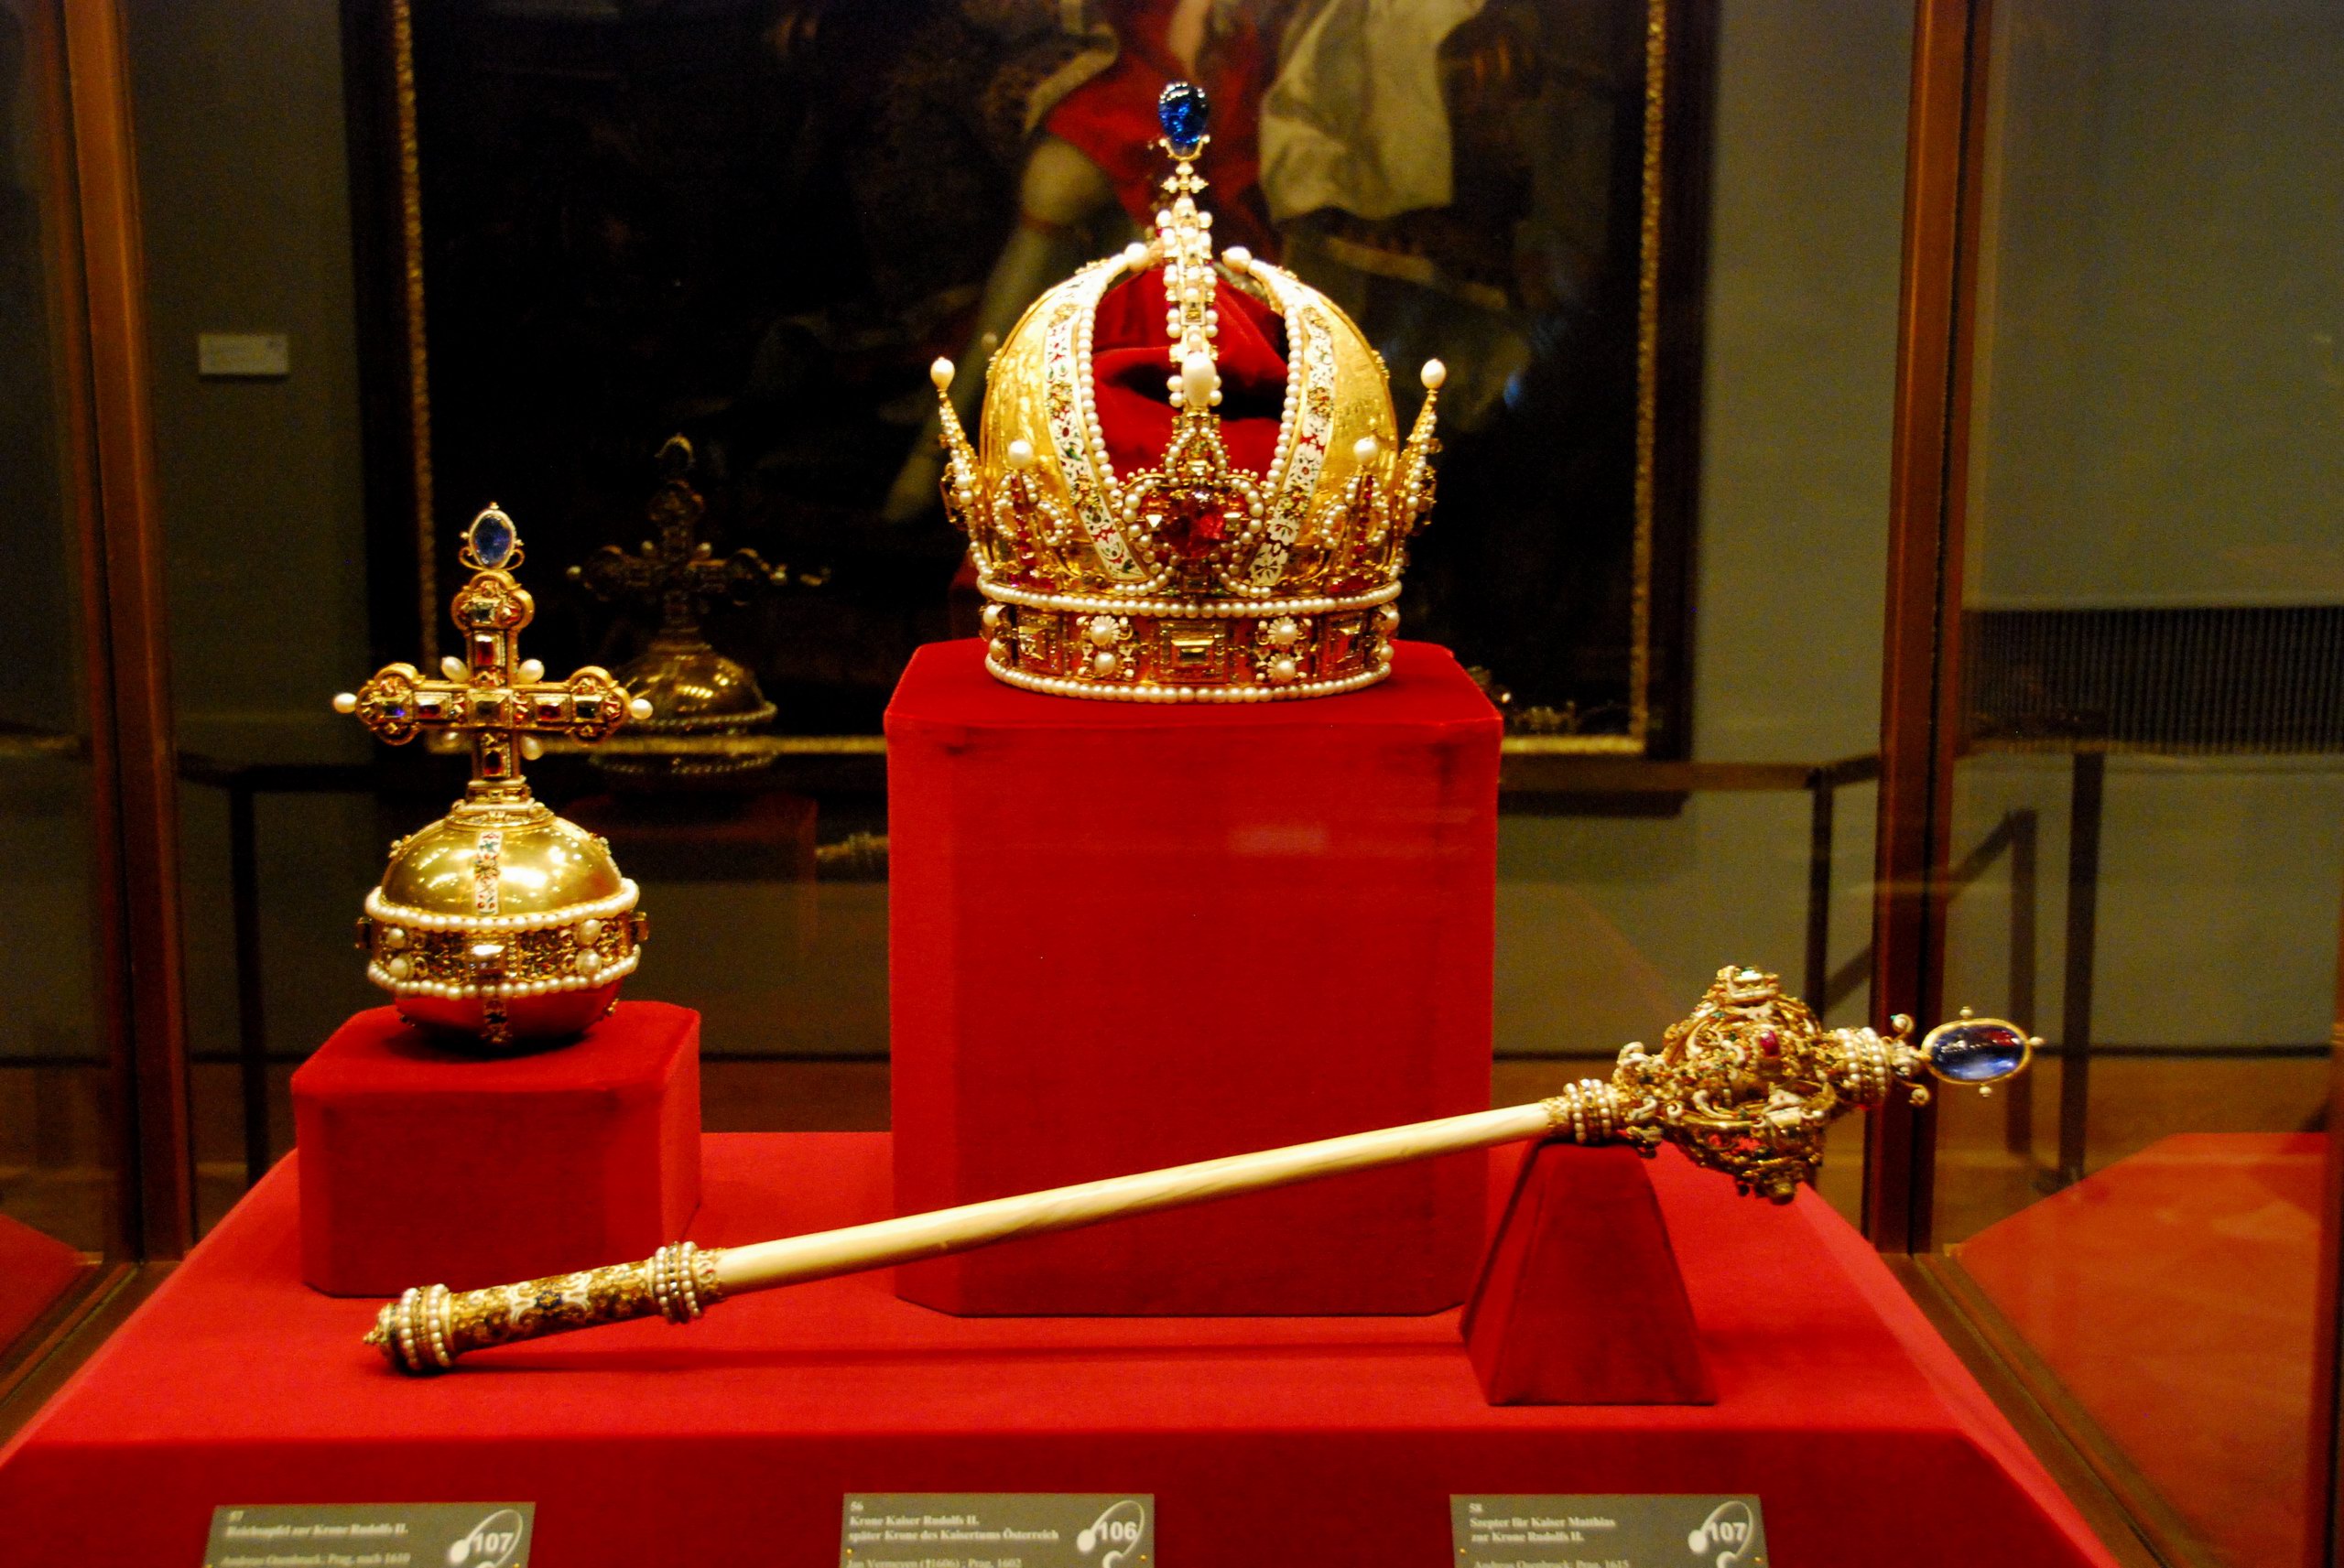 Schatzkammer of the Hofburg, Imperial crown of Austria | European ...